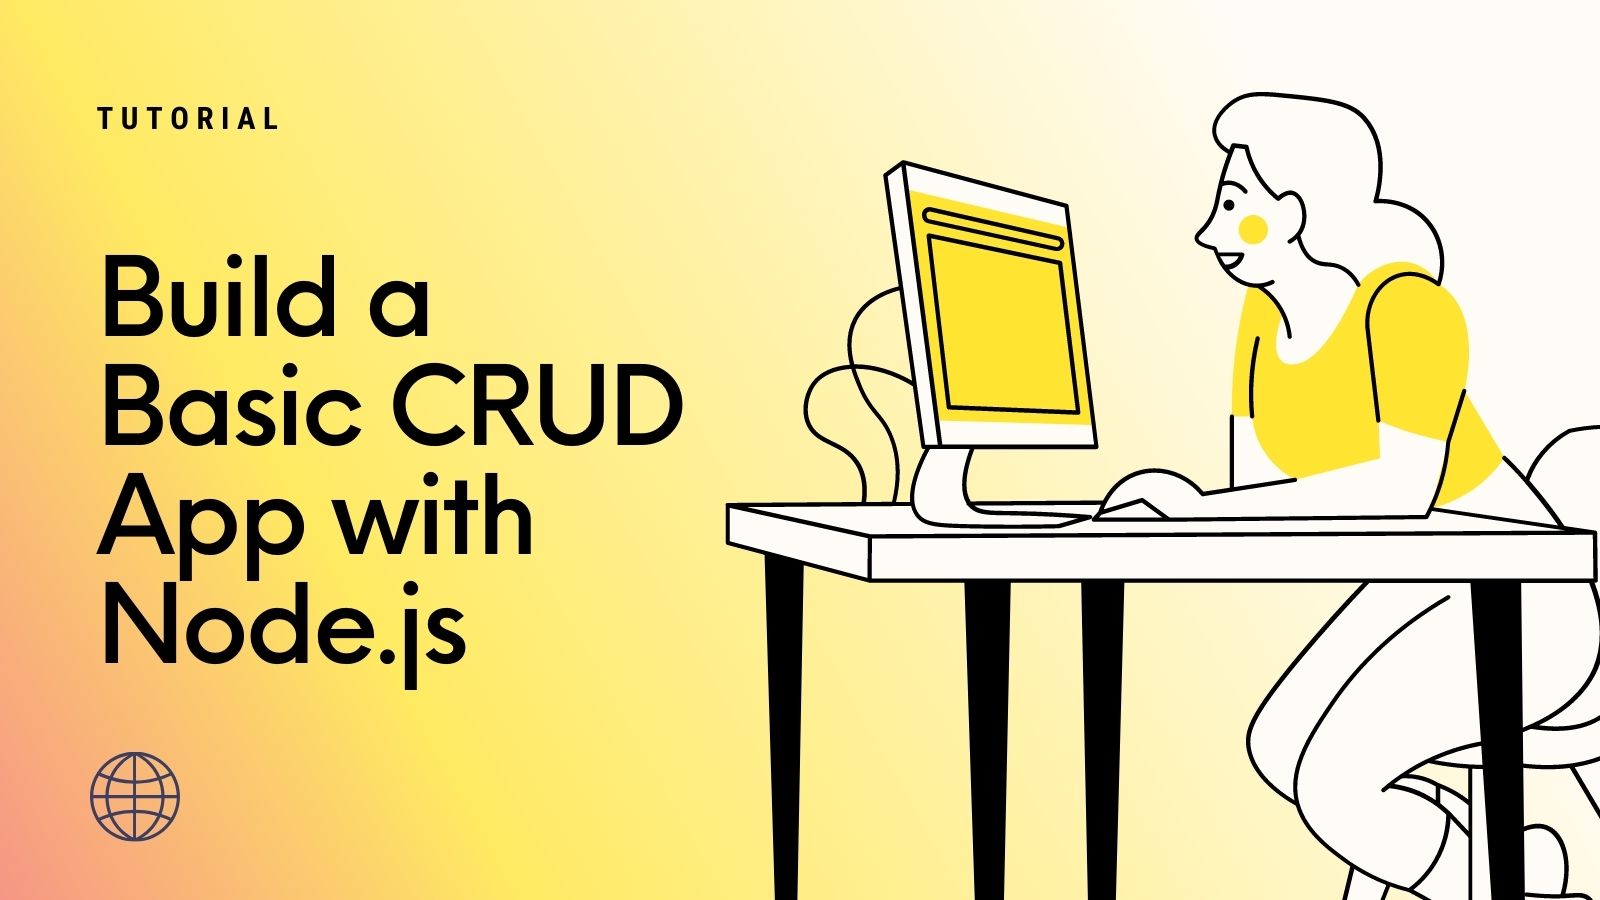 Tutorial: Build a Basic CRUD App with Node.js